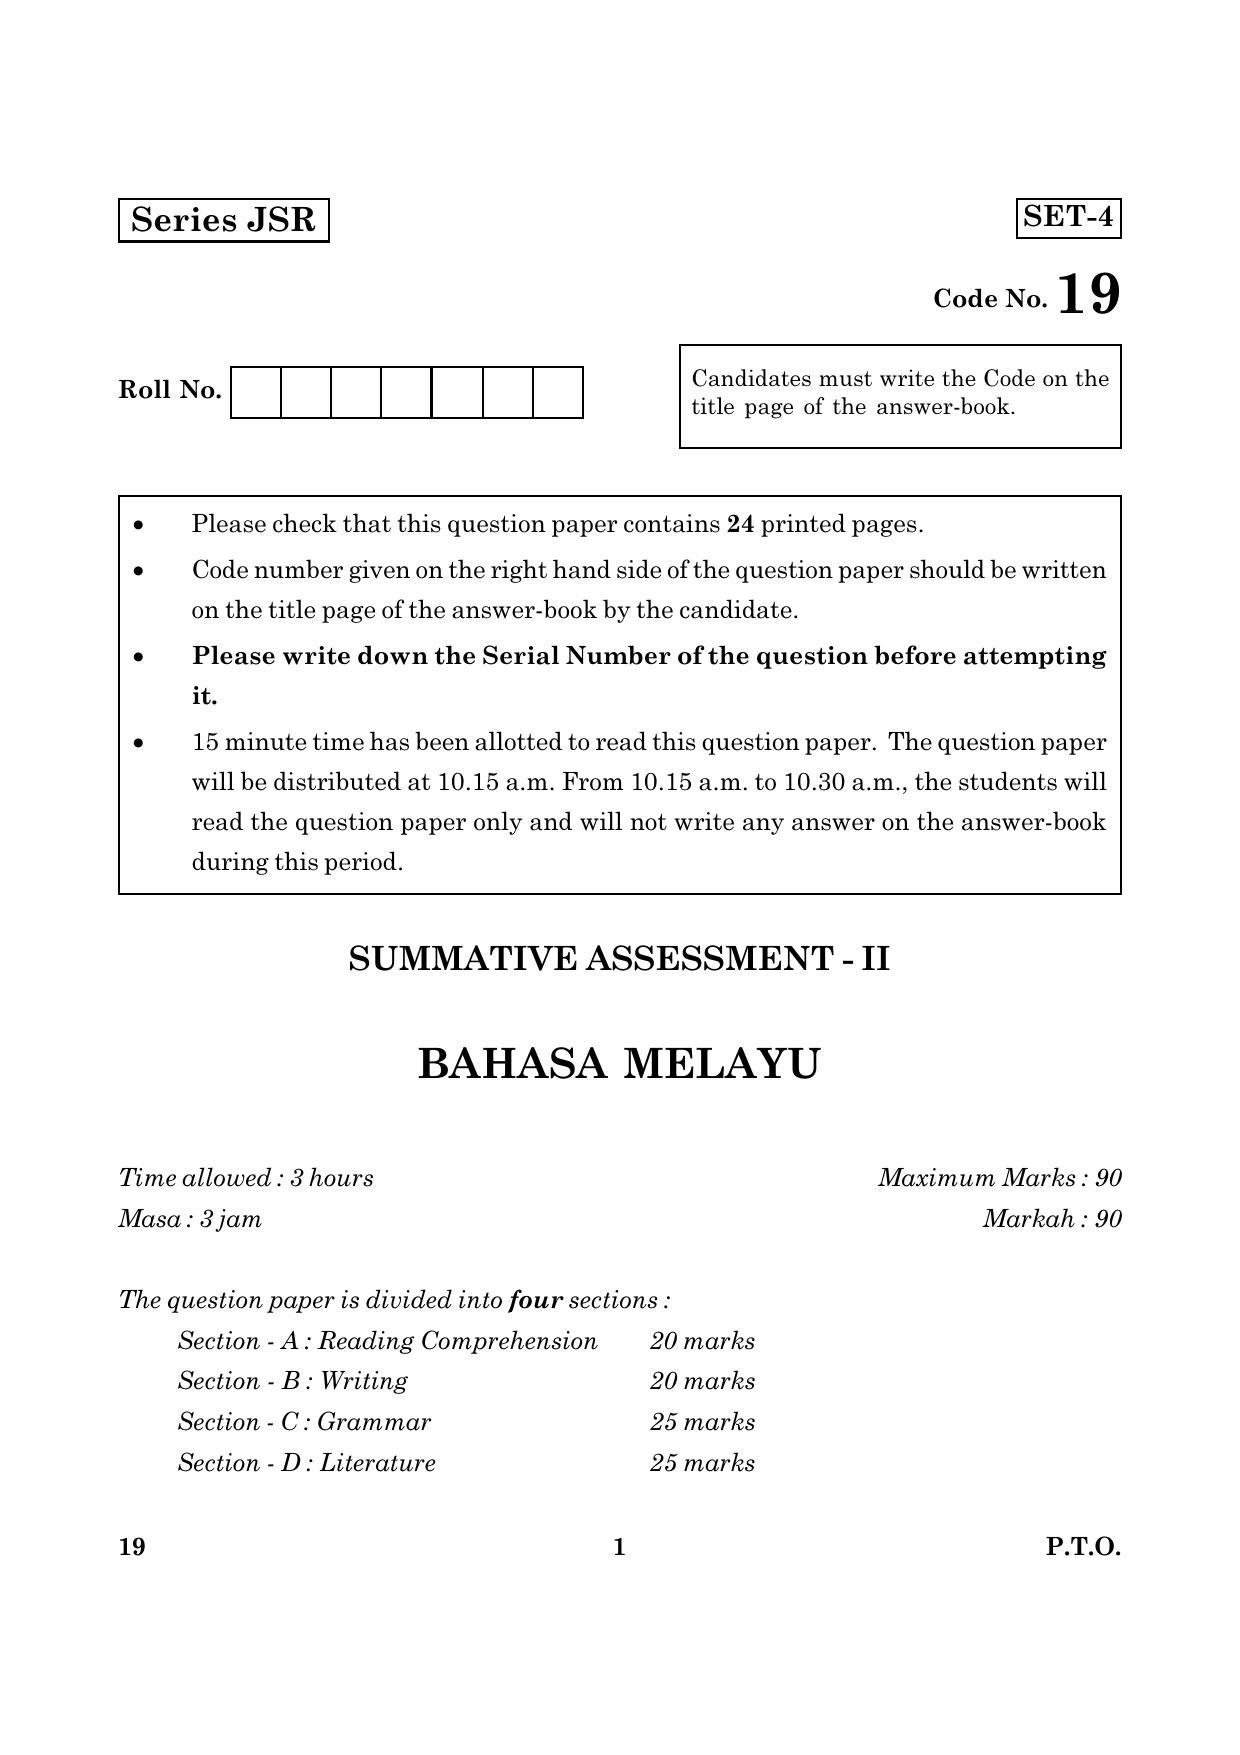 CBSE Class 10 019 Bahasamelayu English 2016 Question Paper - Page 1